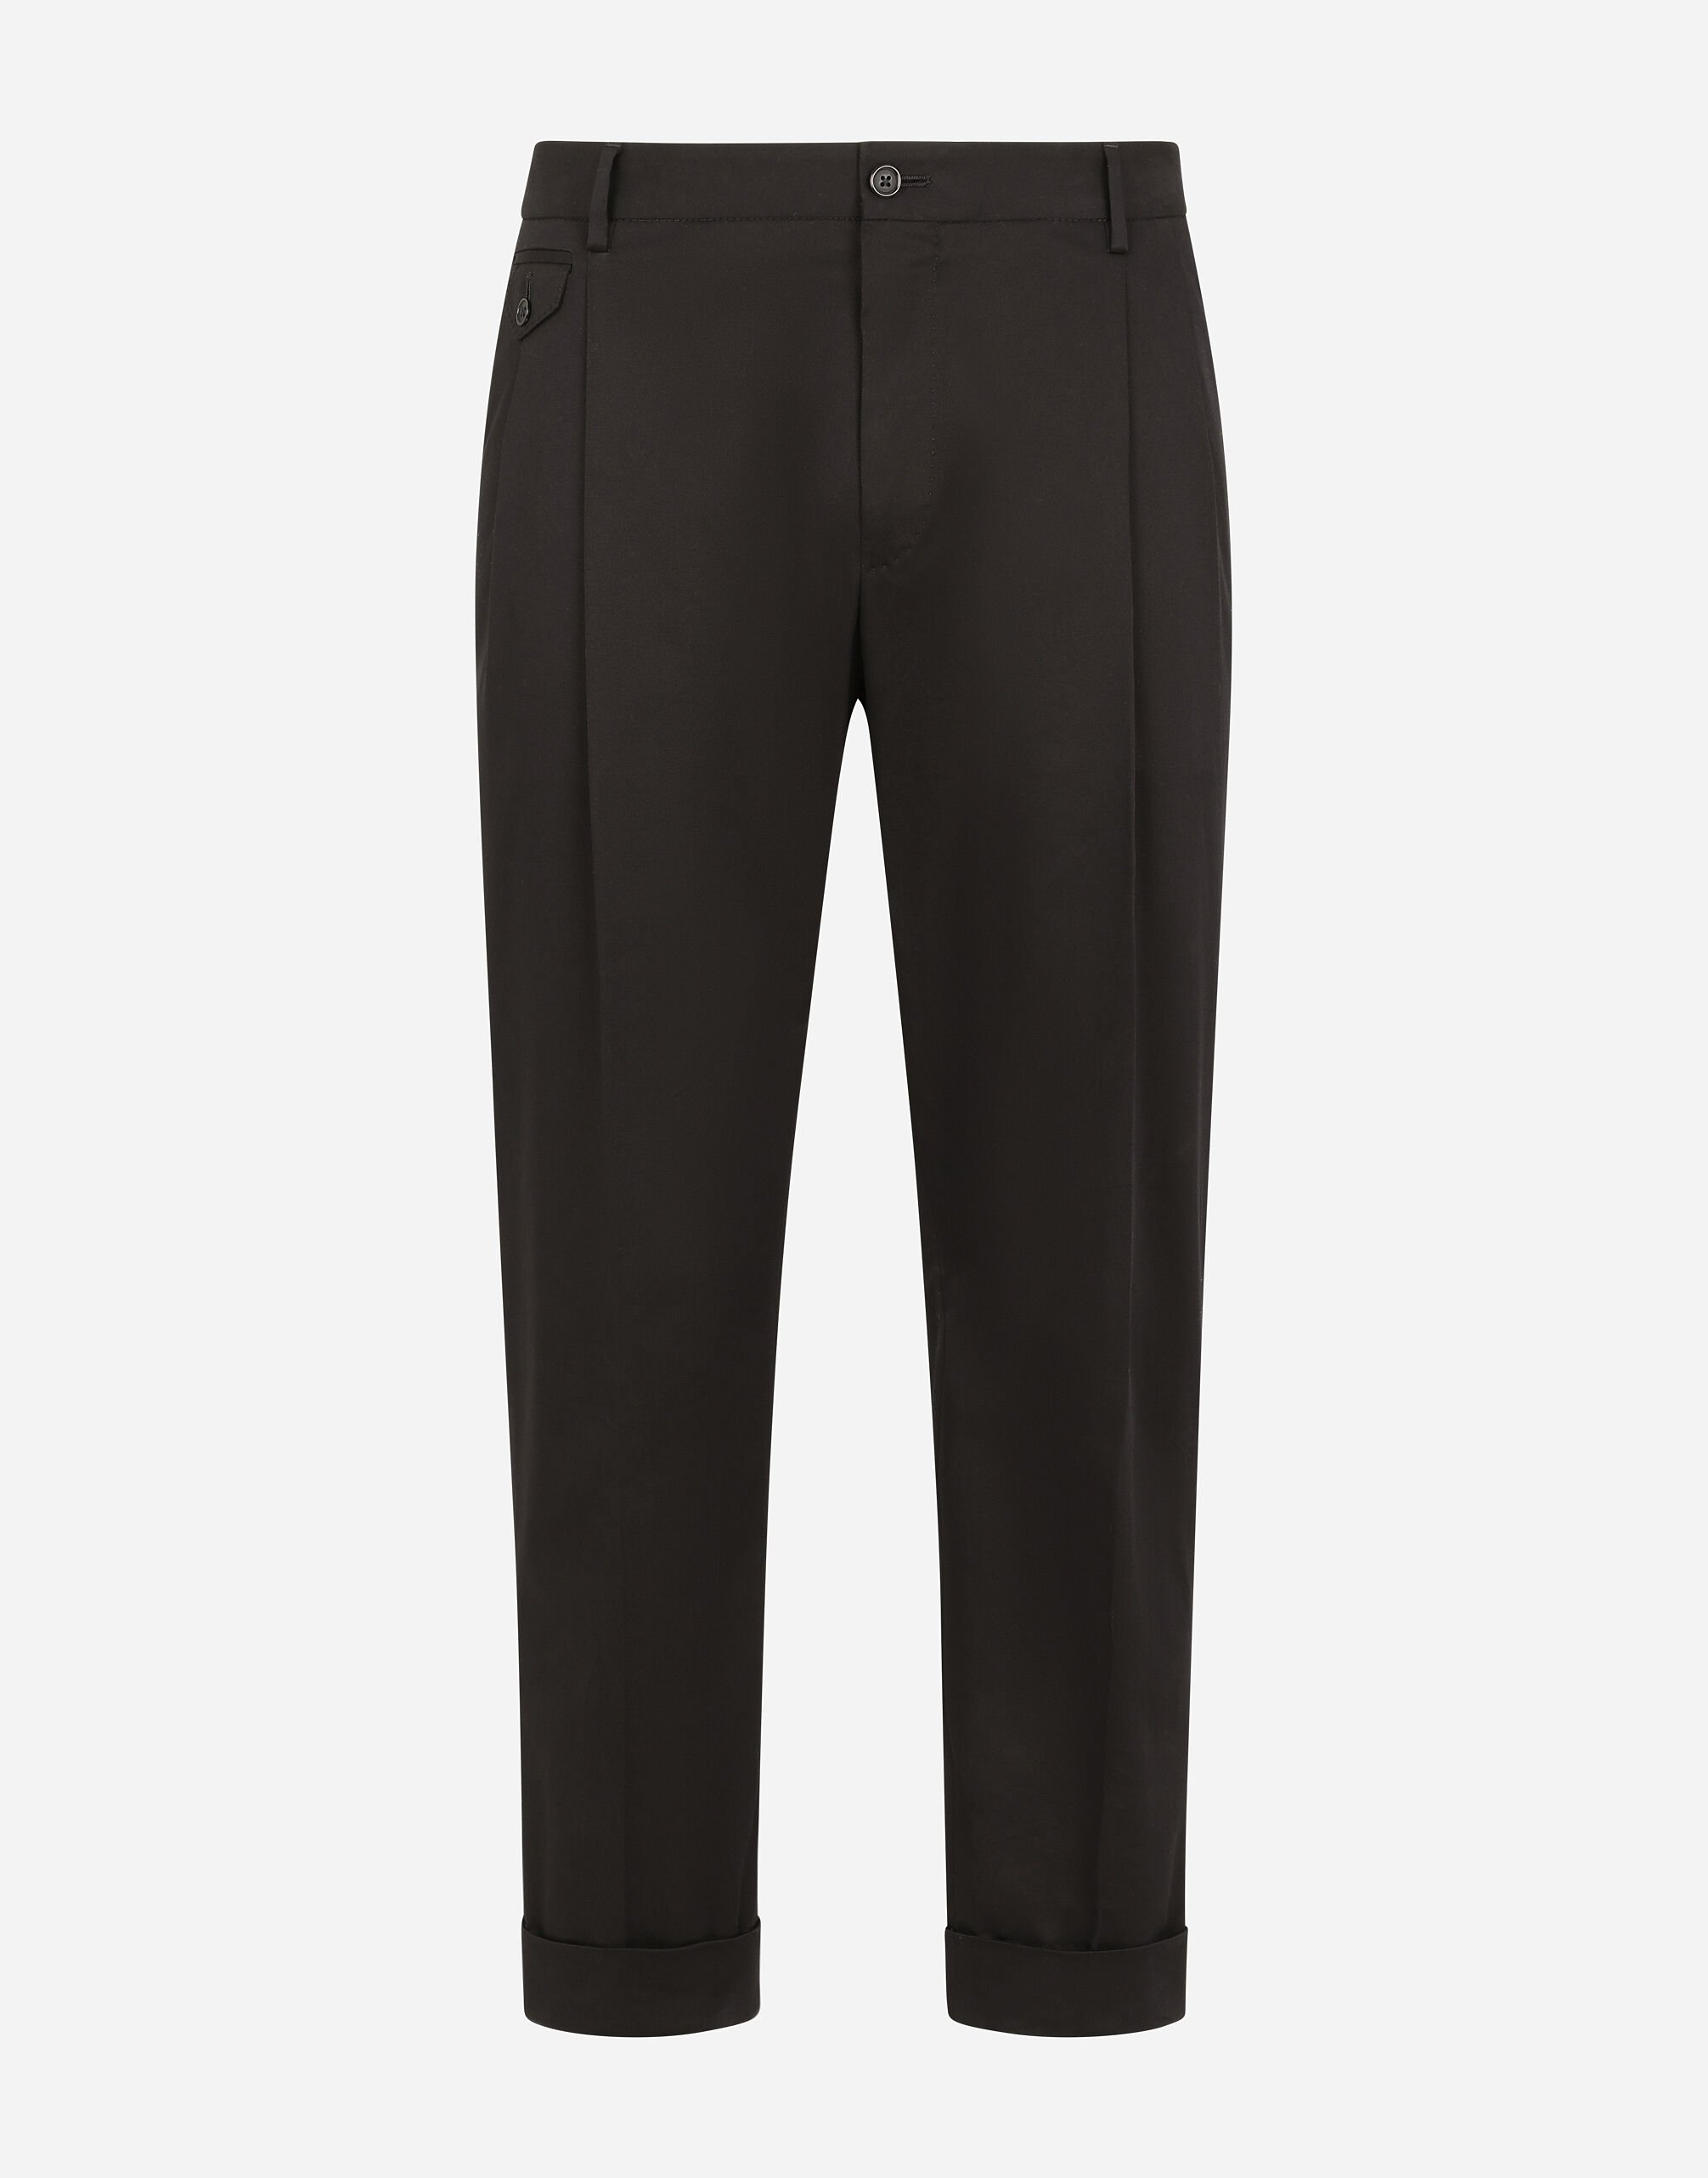 Dolce & Gabbana Stretch cotton pants Black GY6UETFUFJR